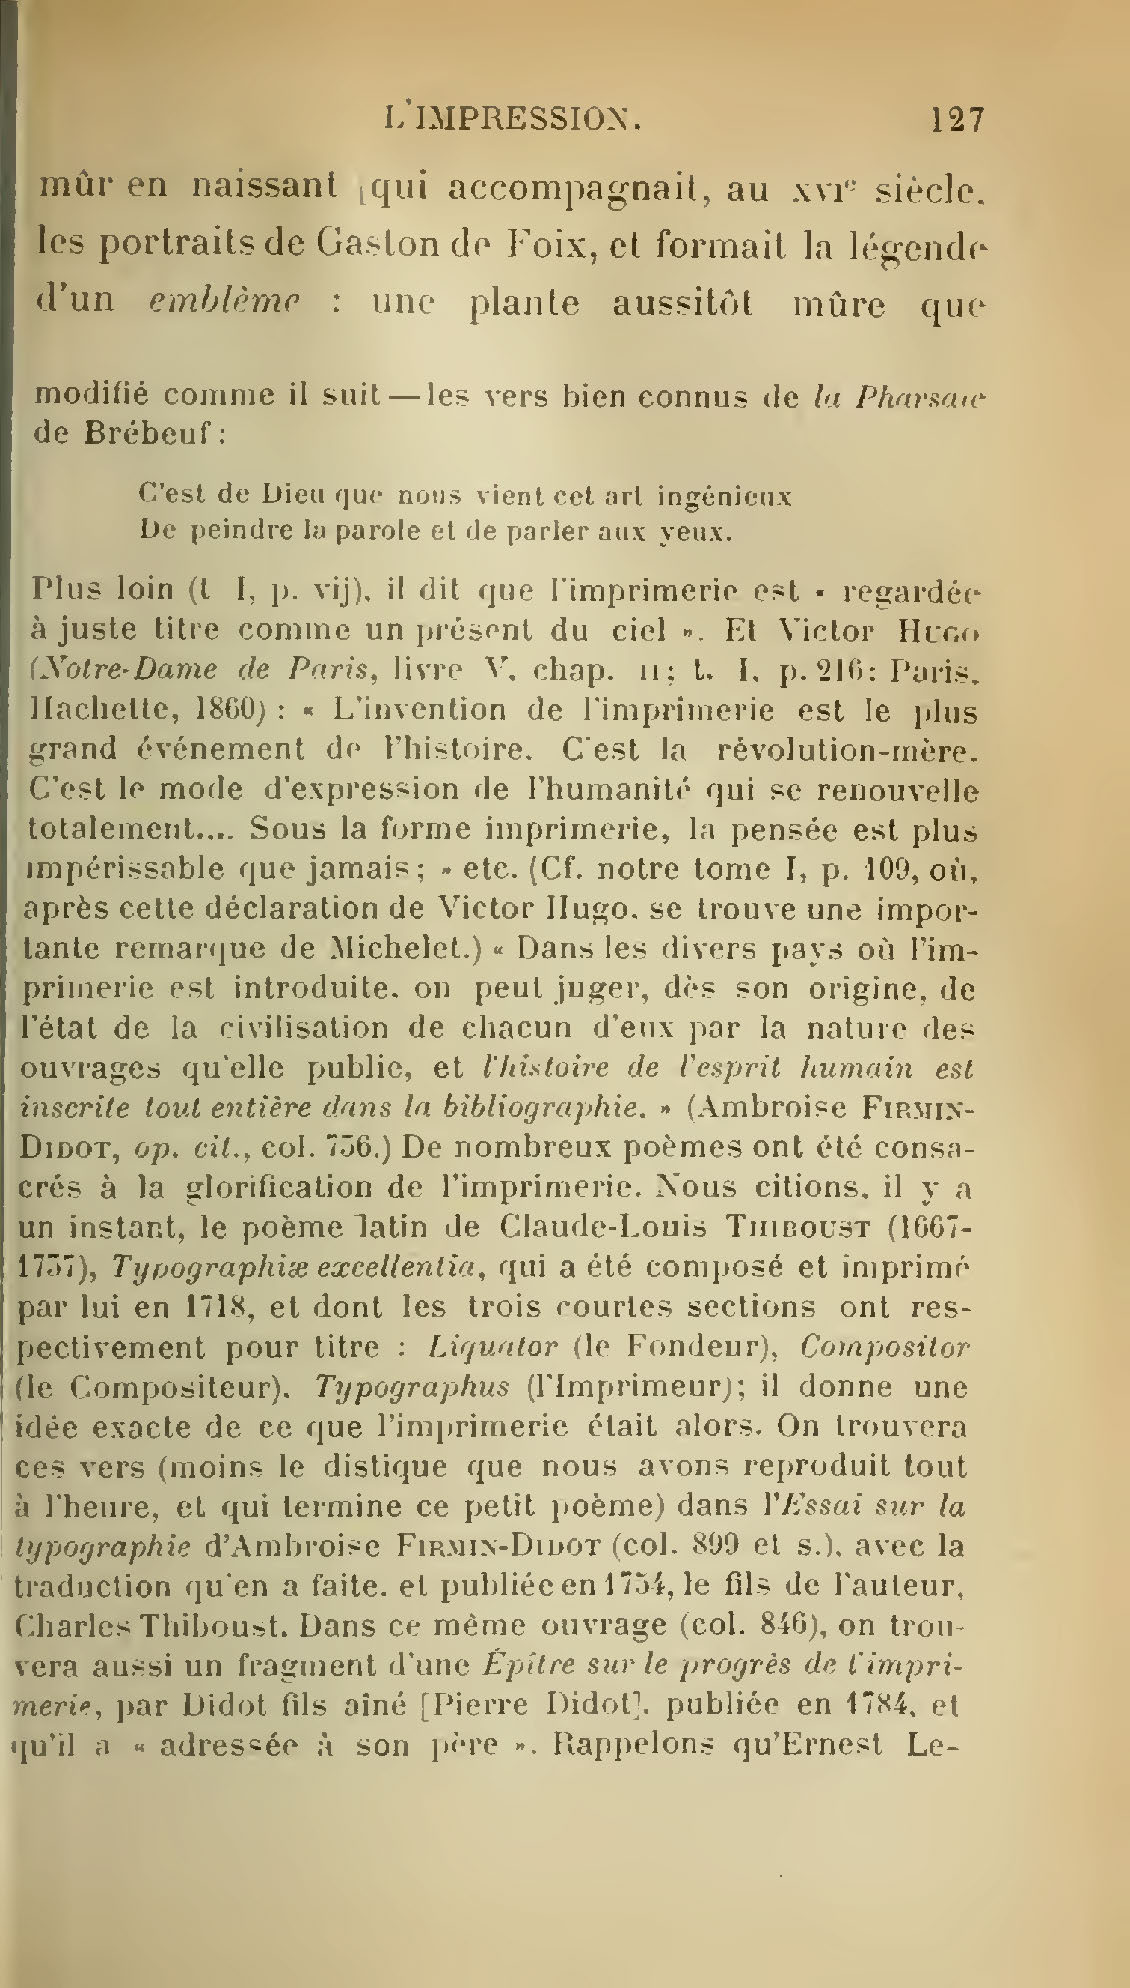 Albert Cim, Le Livre, t. III, p. 127.